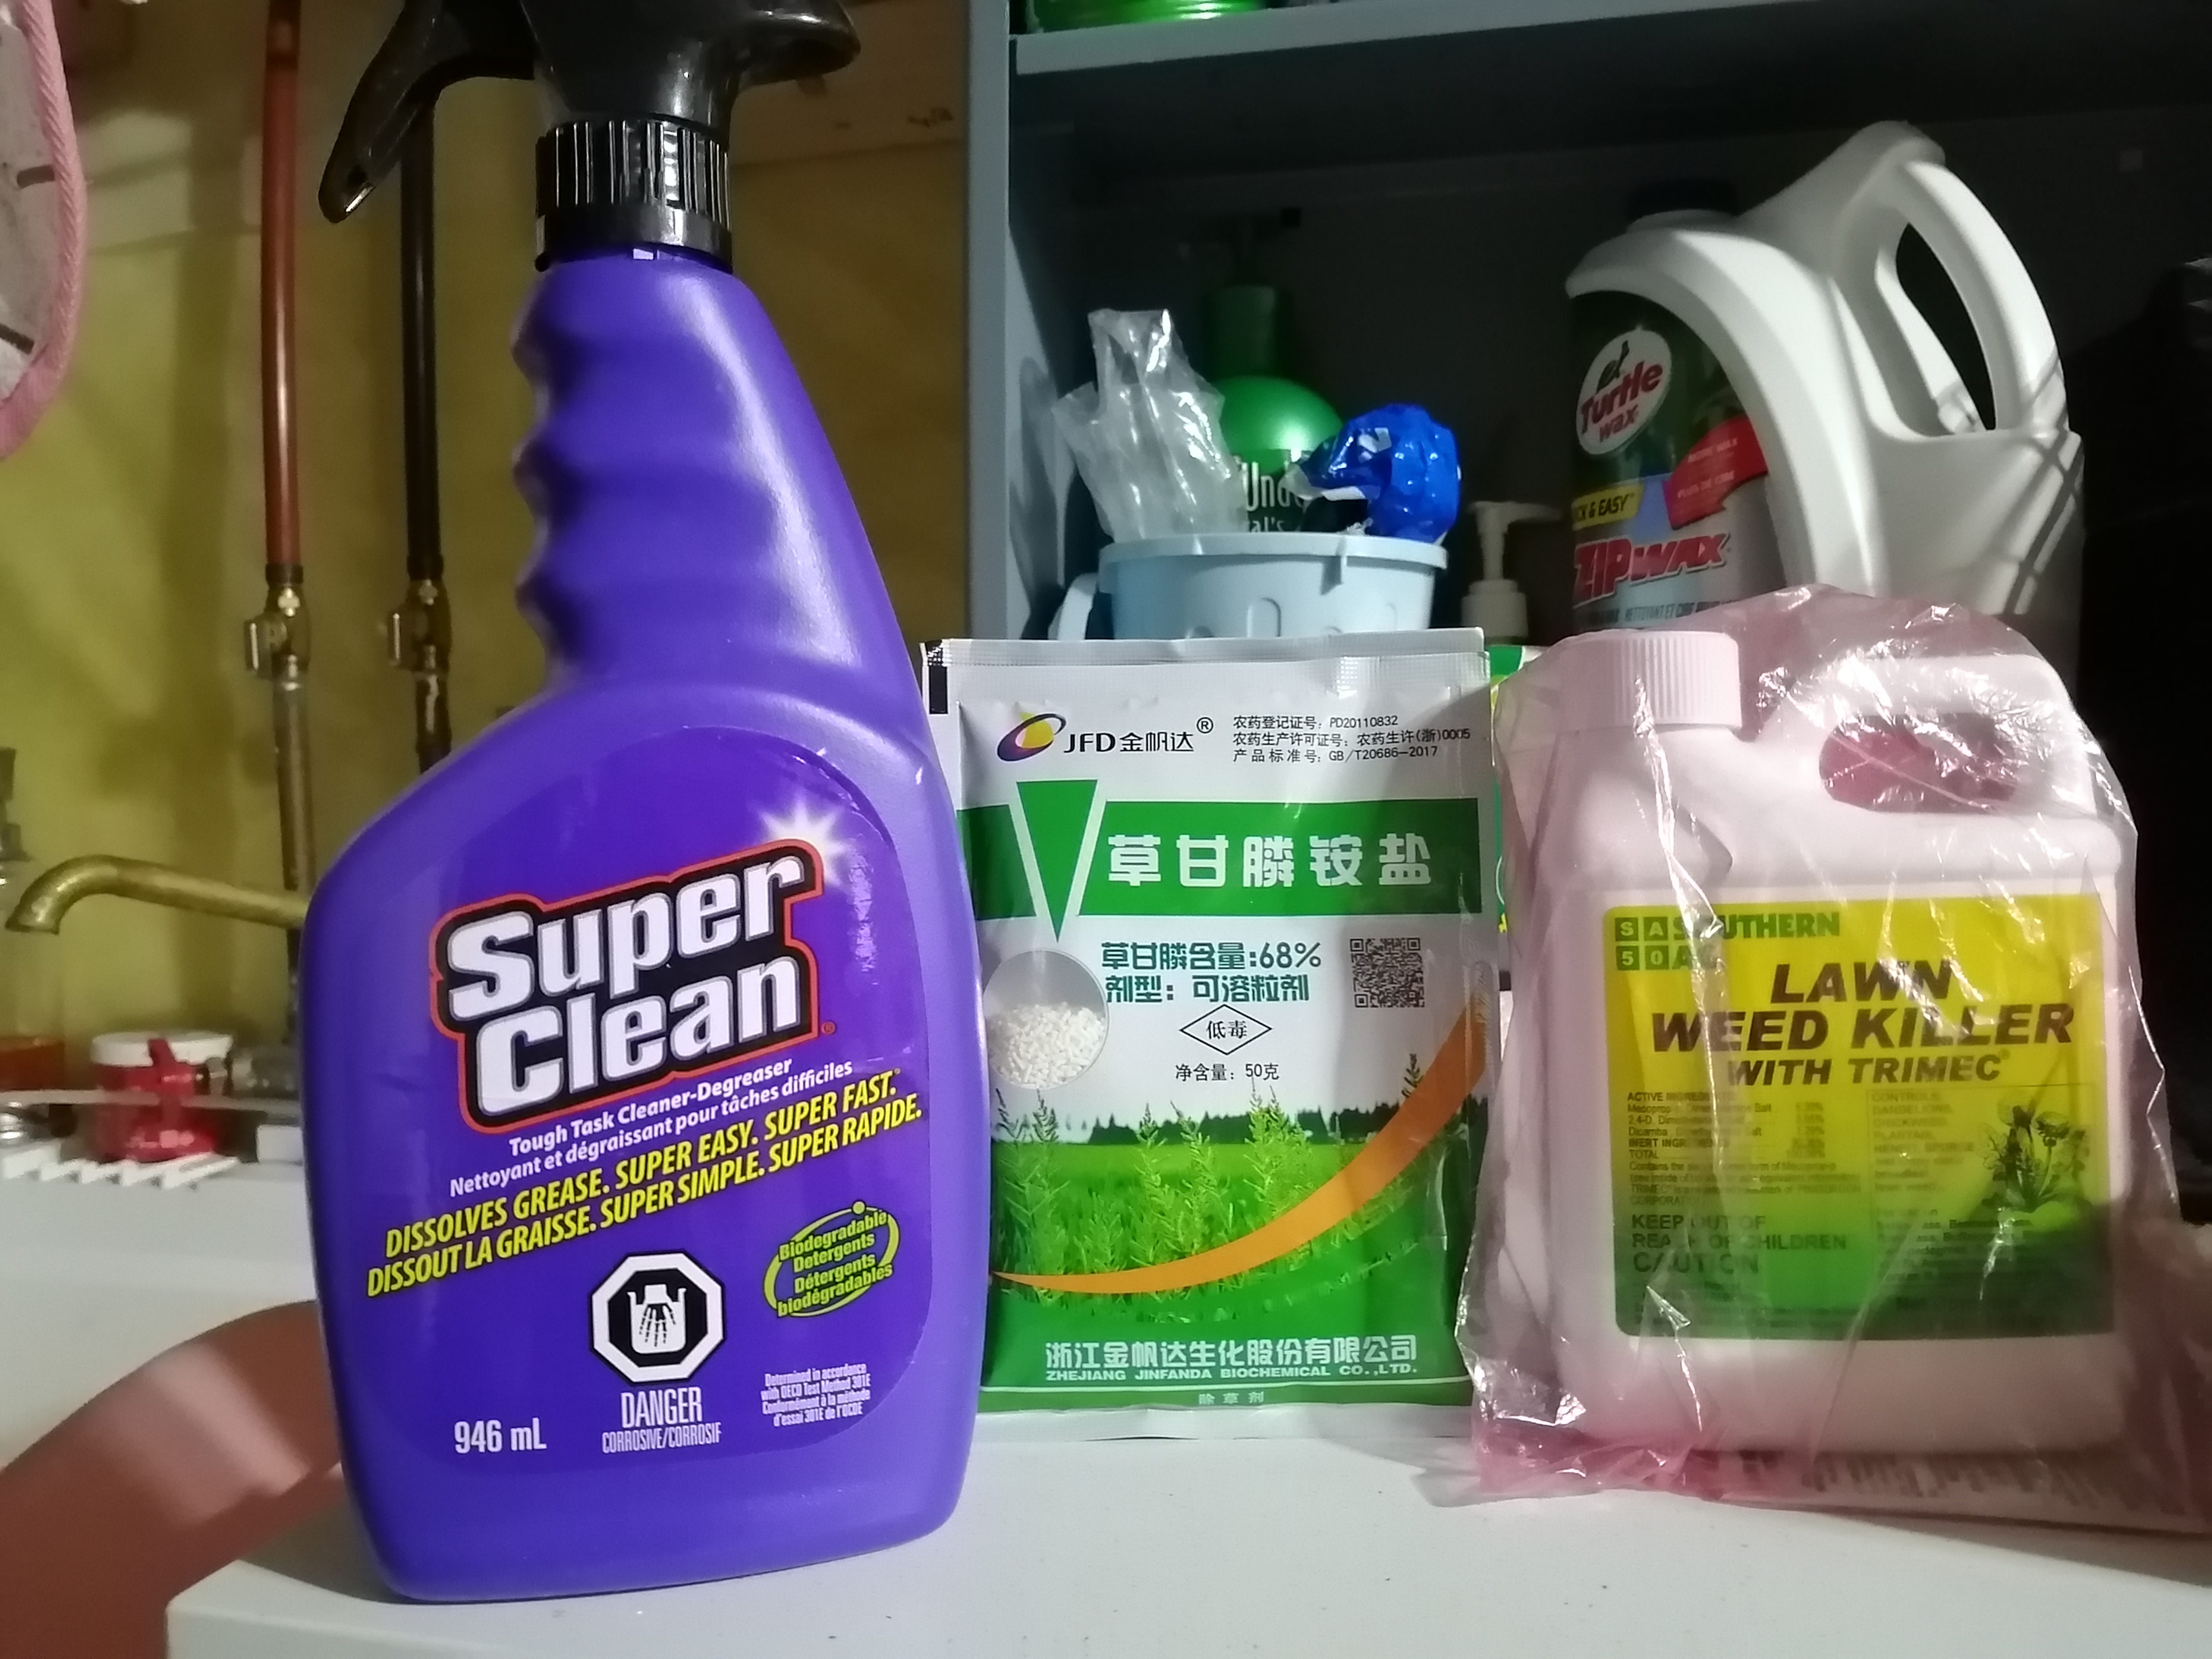 Castrol Super Clean That Purple Stuff Tough Task Cleaner/Degreaser 4 oz